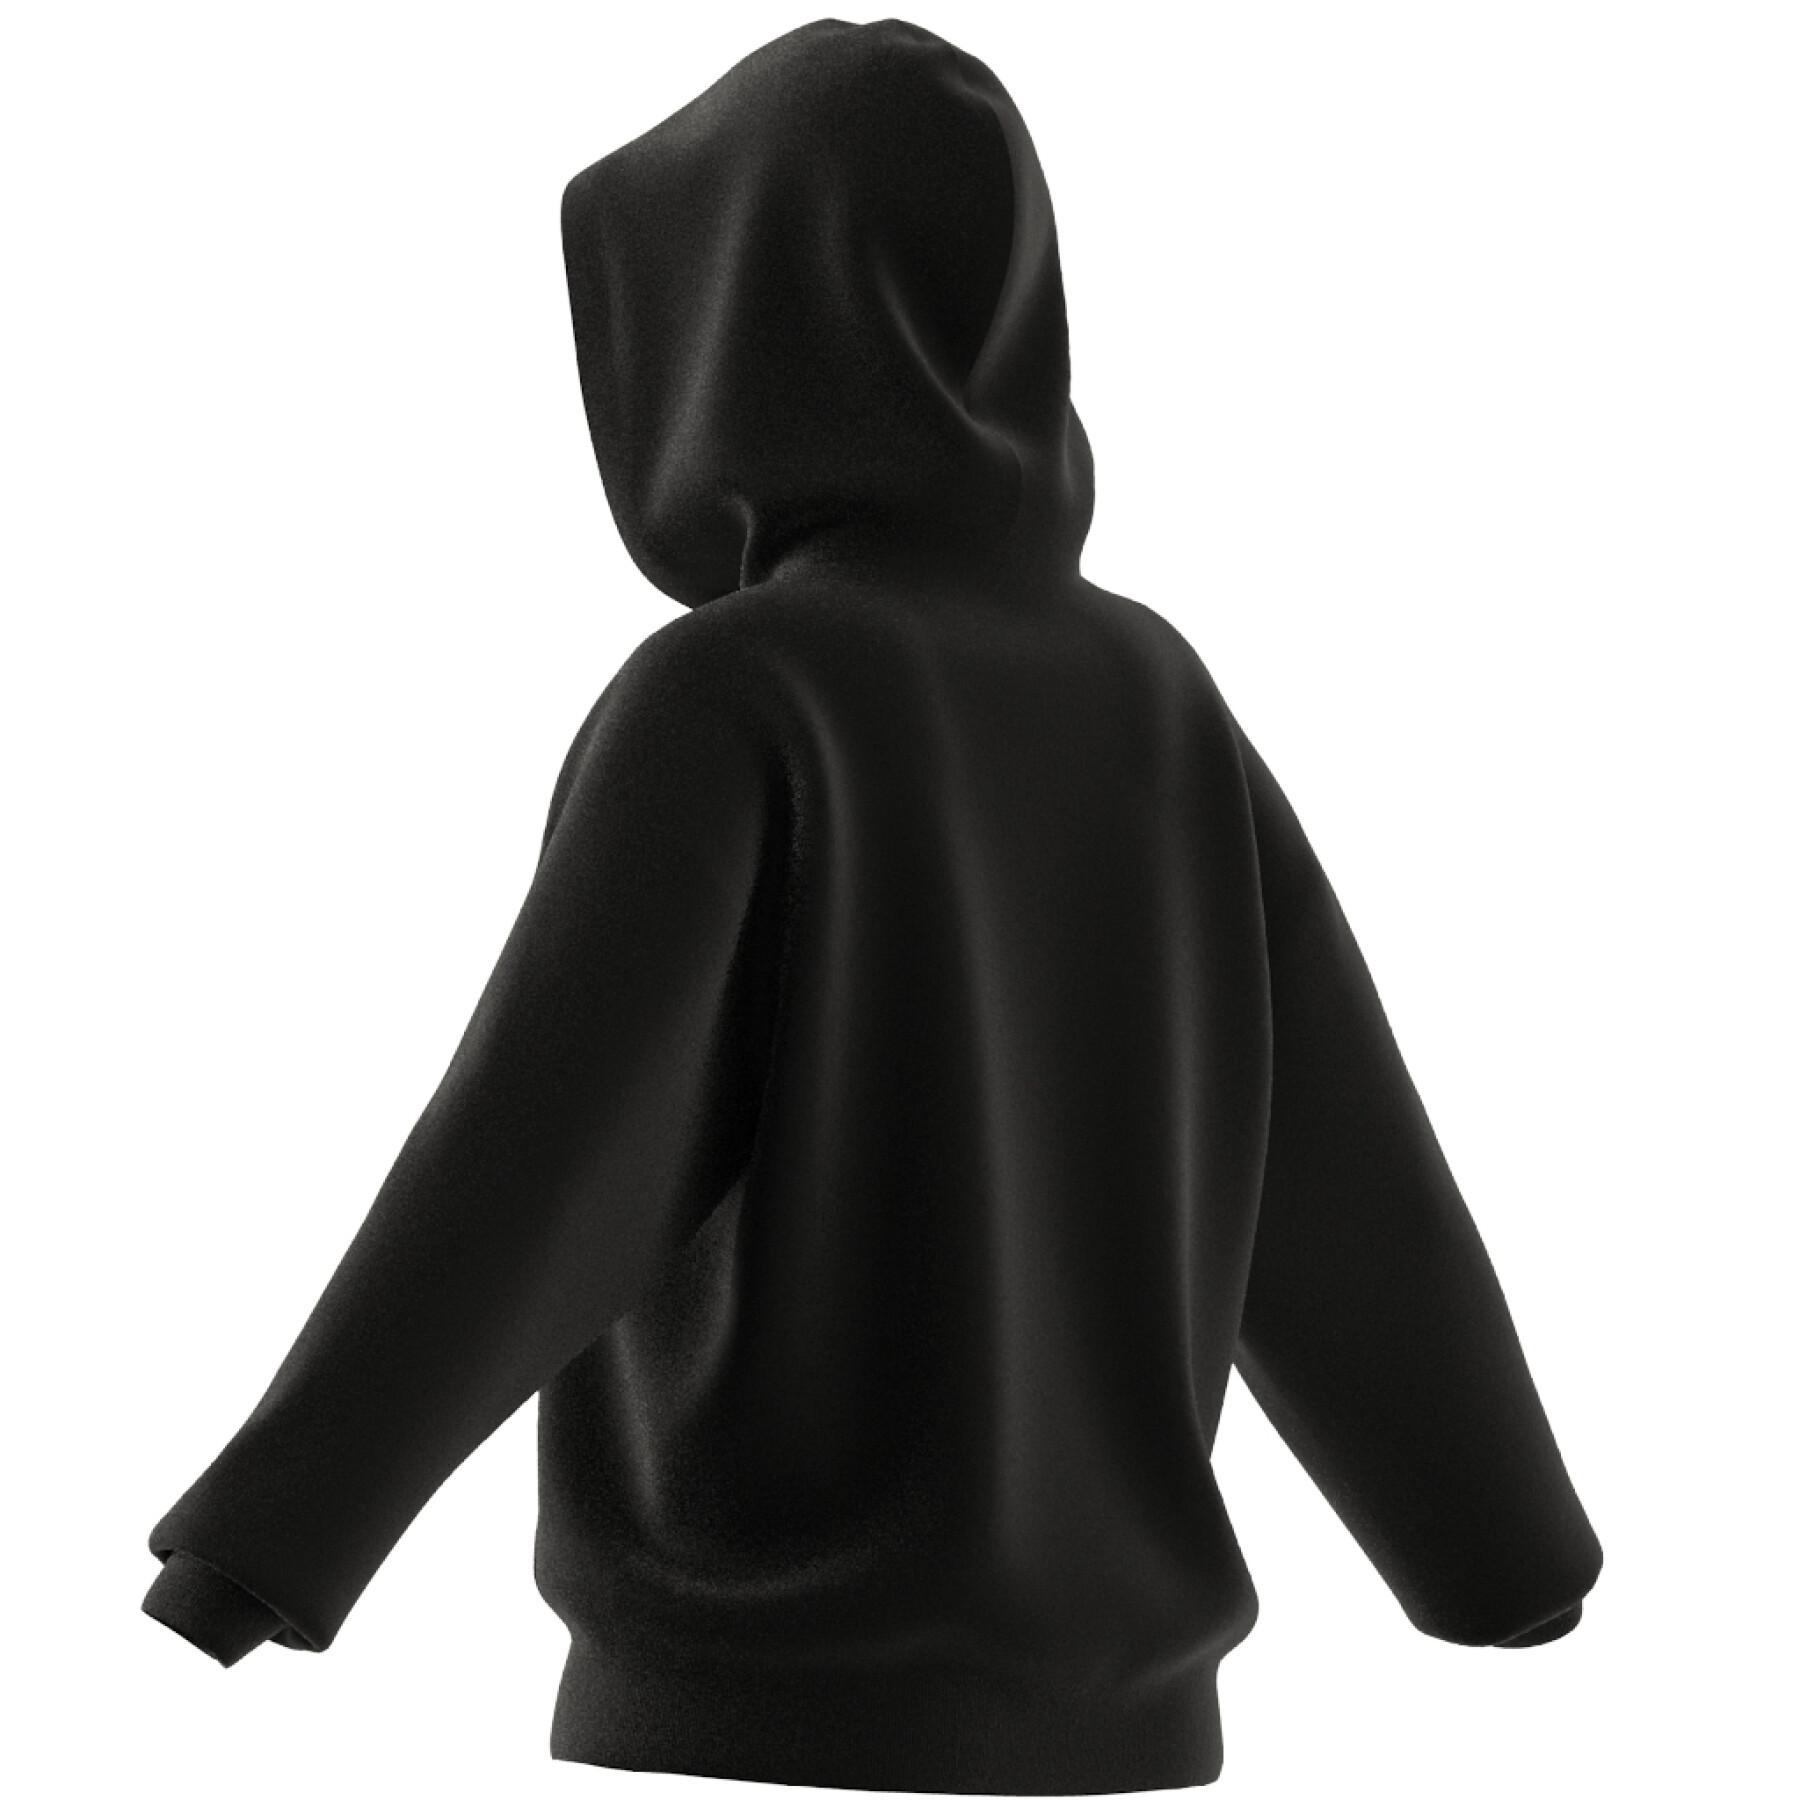 Sweatshirt oversized hoodie for women adidas Essentials Big Logo